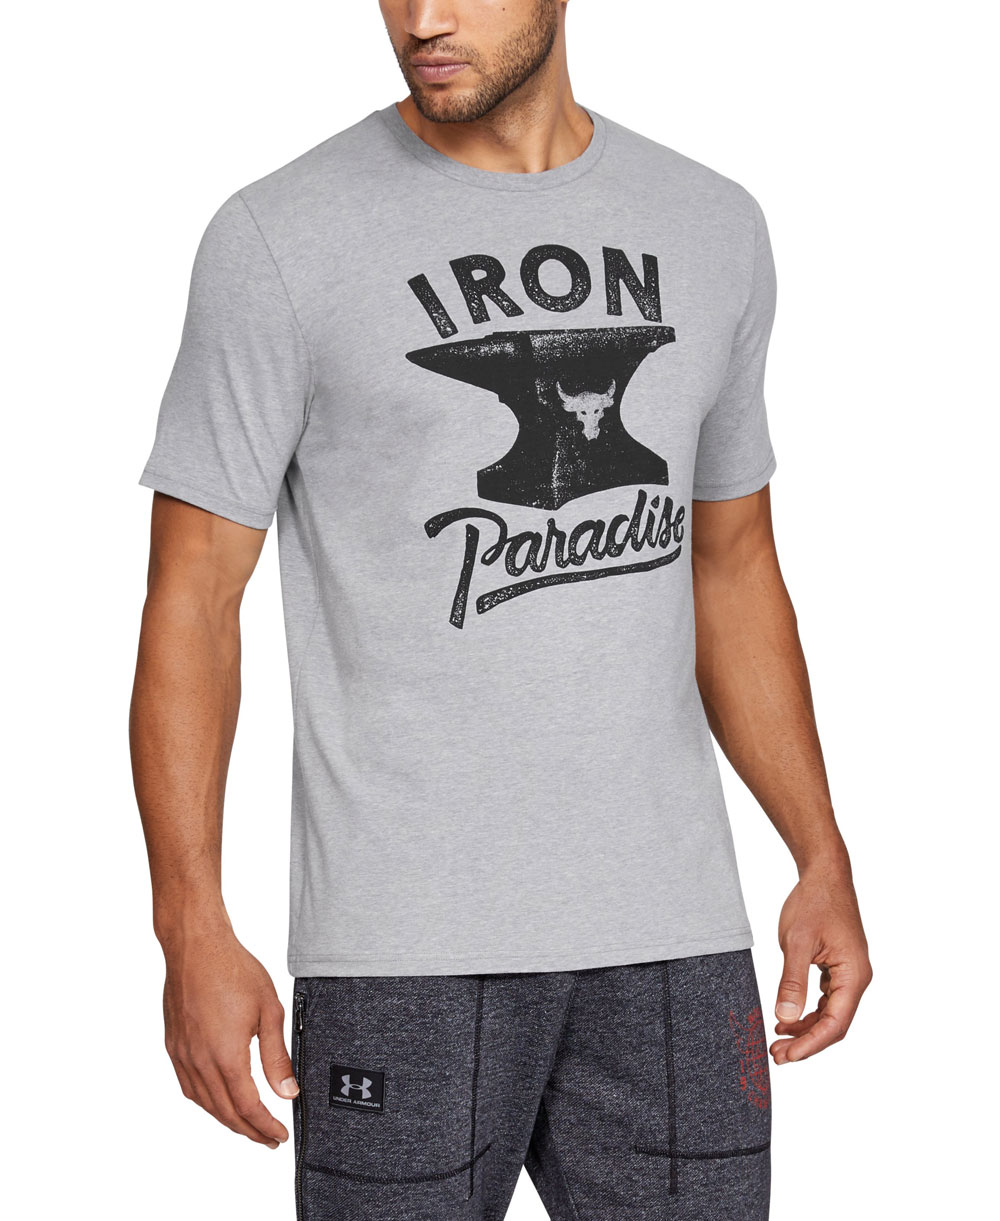 Men's Short Sleeve T-Shirt Project Rock Iron Paradise Steel Light Heather